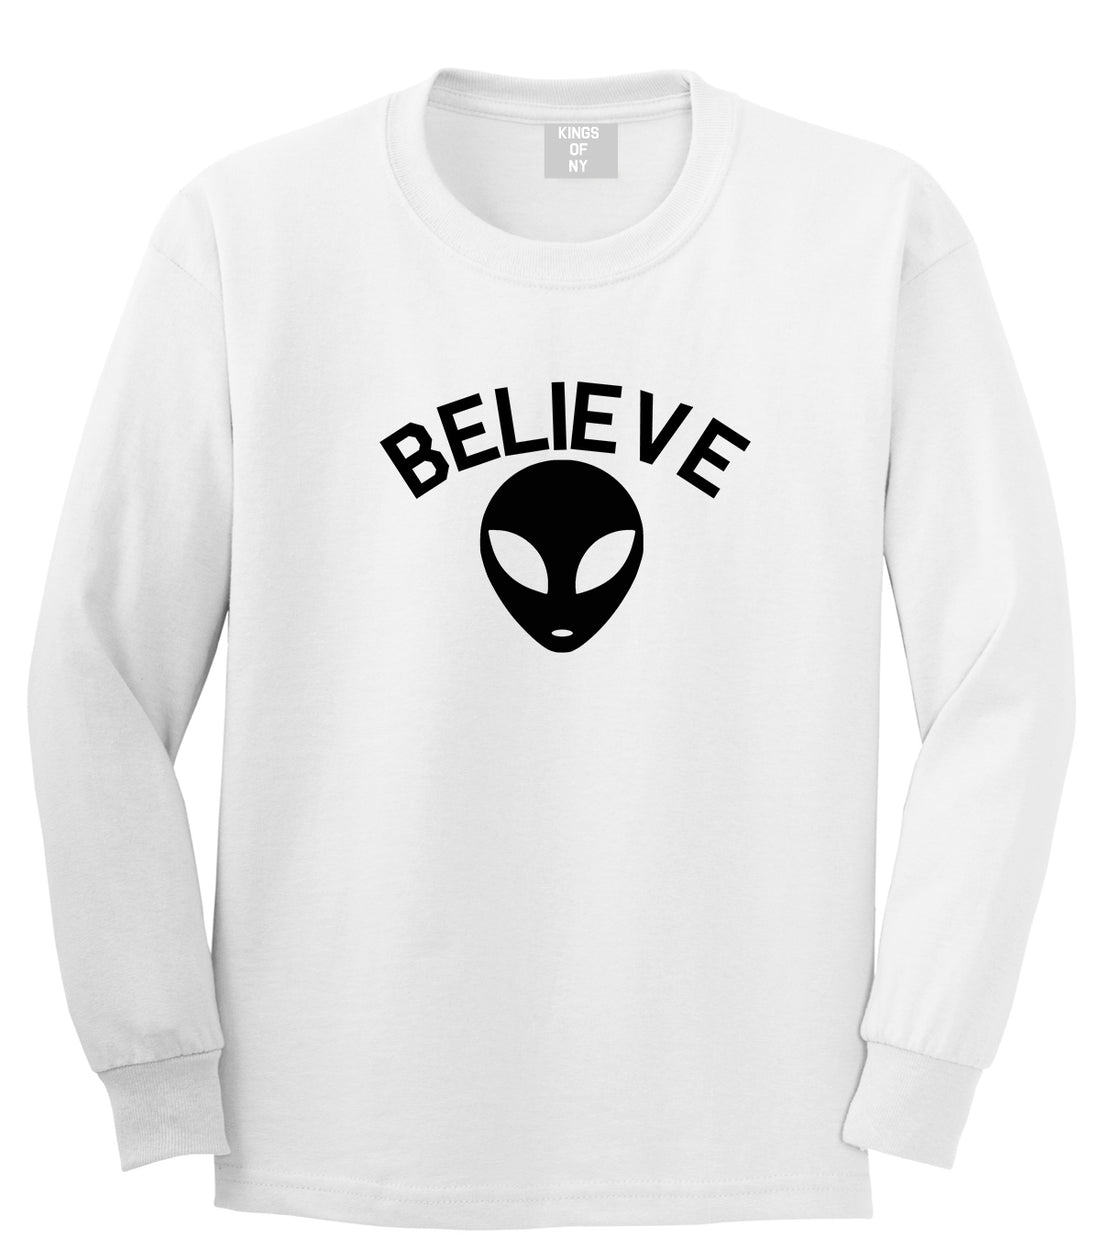 Believe Alien White Long Sleeve T-Shirt by Kings Of NY